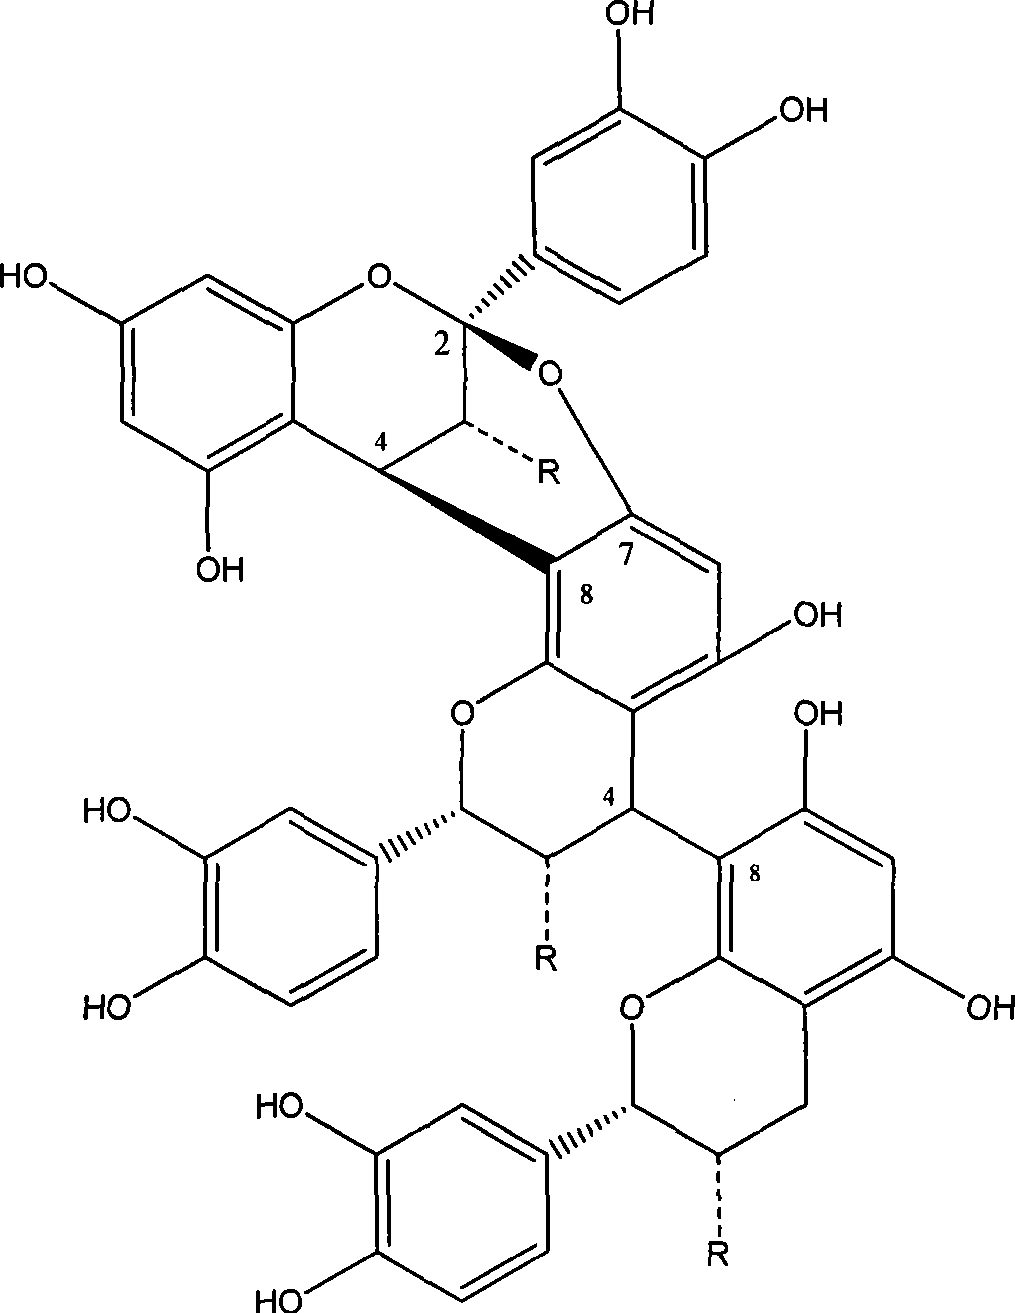 Method for catalytic hydrogenolysis of cinnamon proanthocyanidins high polymer to oligomer